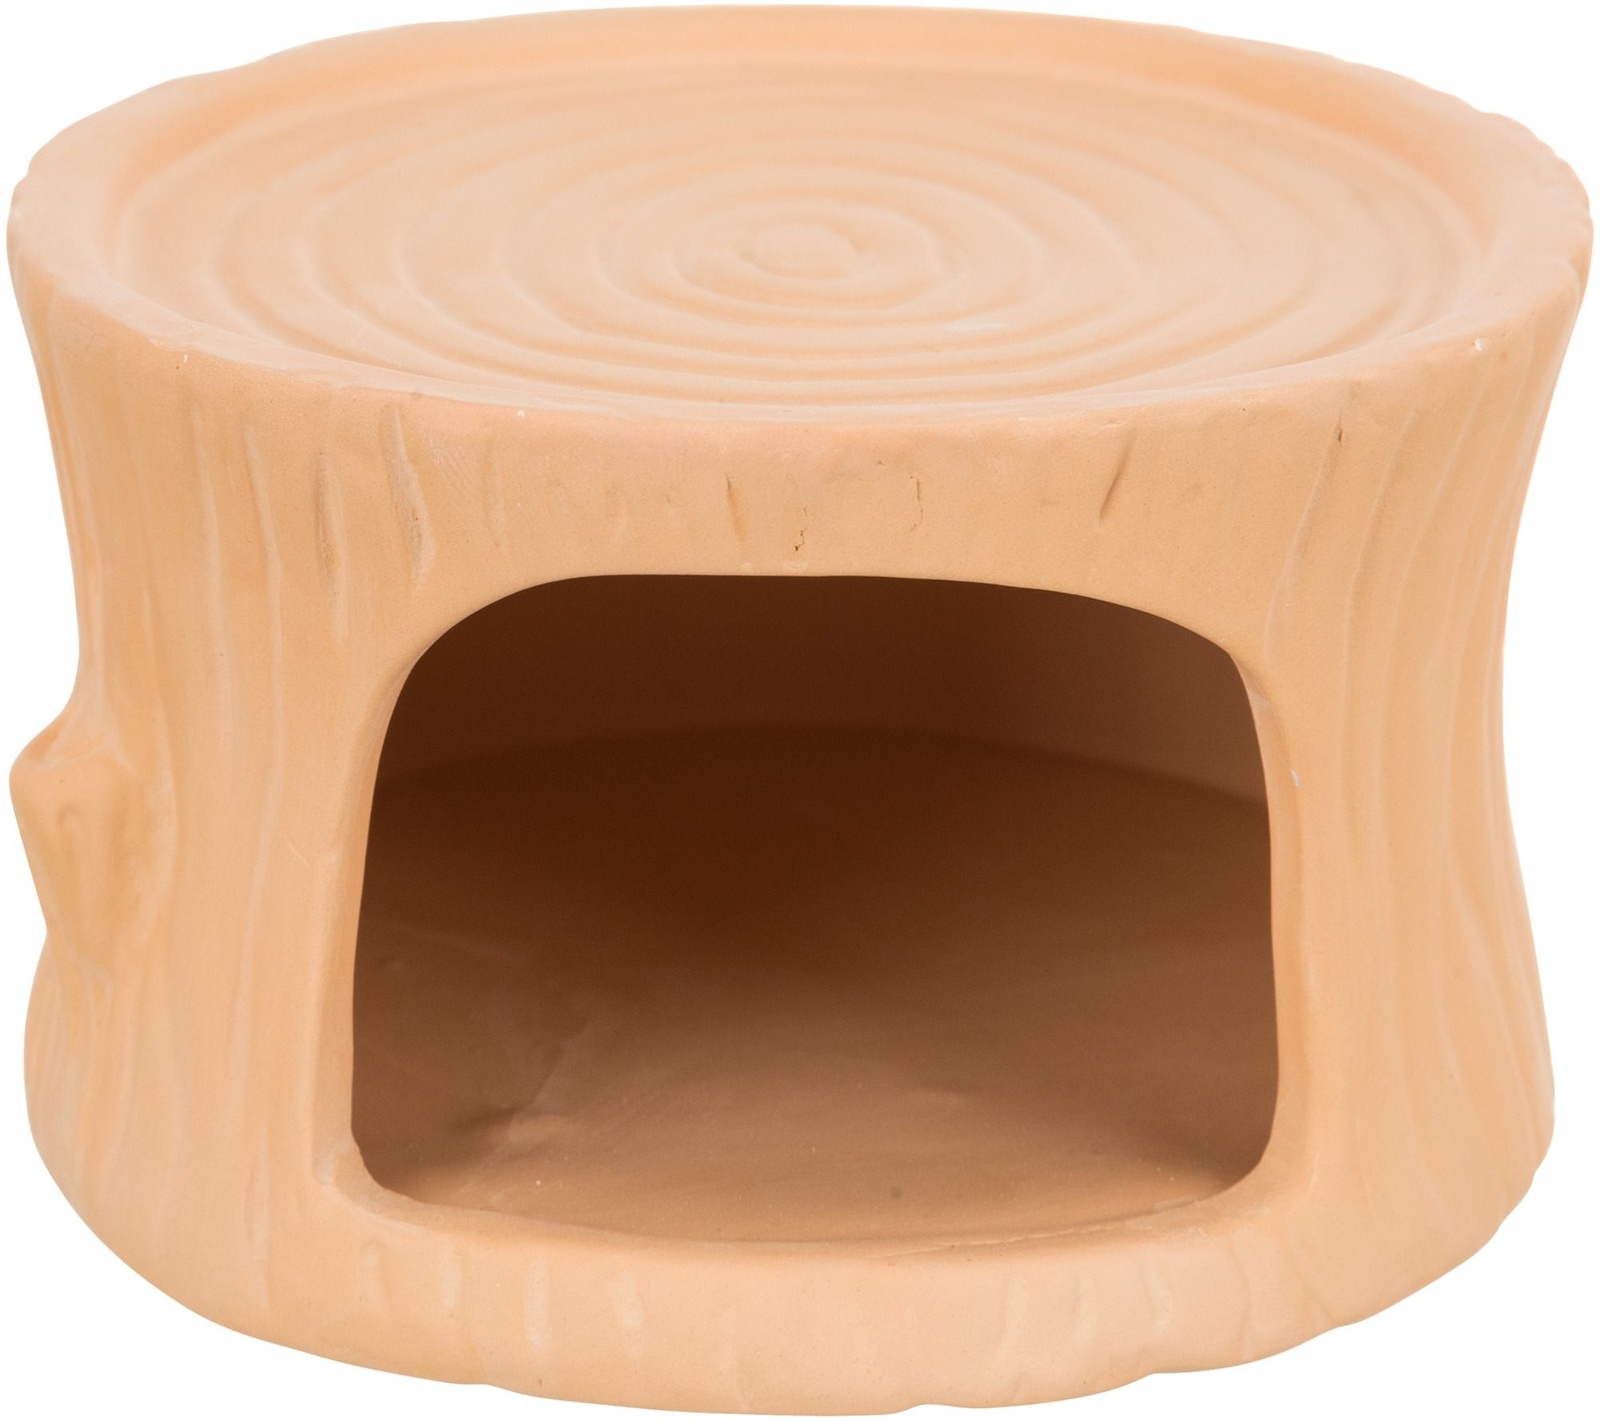 Trixie Trixie домик для мышей и хомяков, керамика, 11 x 6 x 10 см, терракотовый (275 г) trixie домик для хомяков кокос ф13 х 56 см